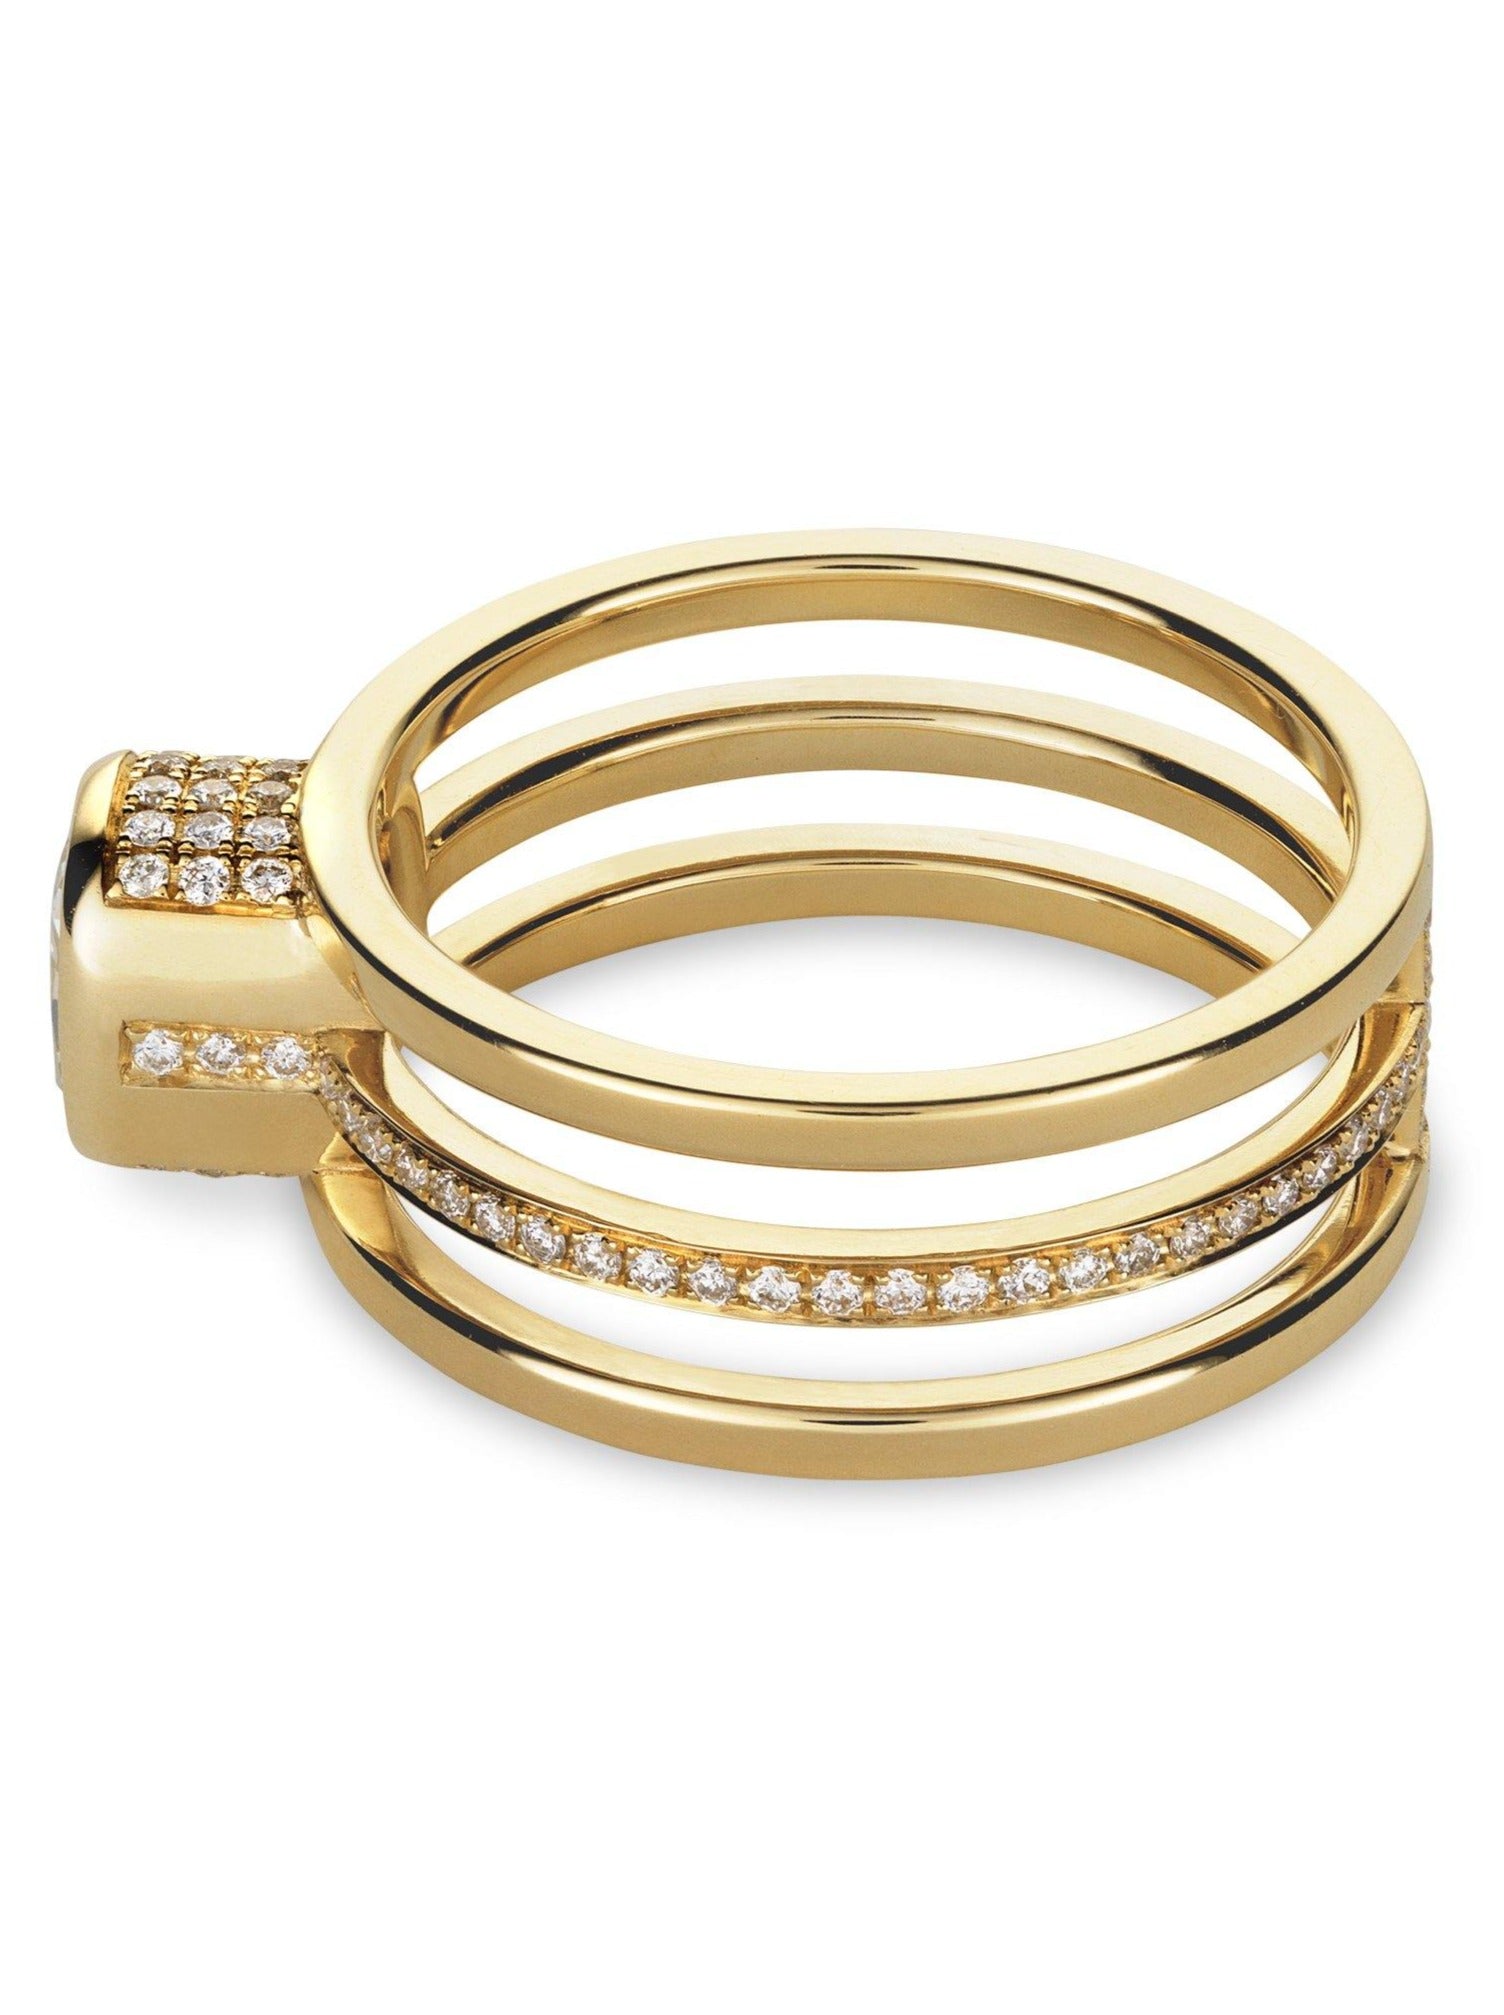 Sparkling - Ring with 1.41 carat sparkling diamonds